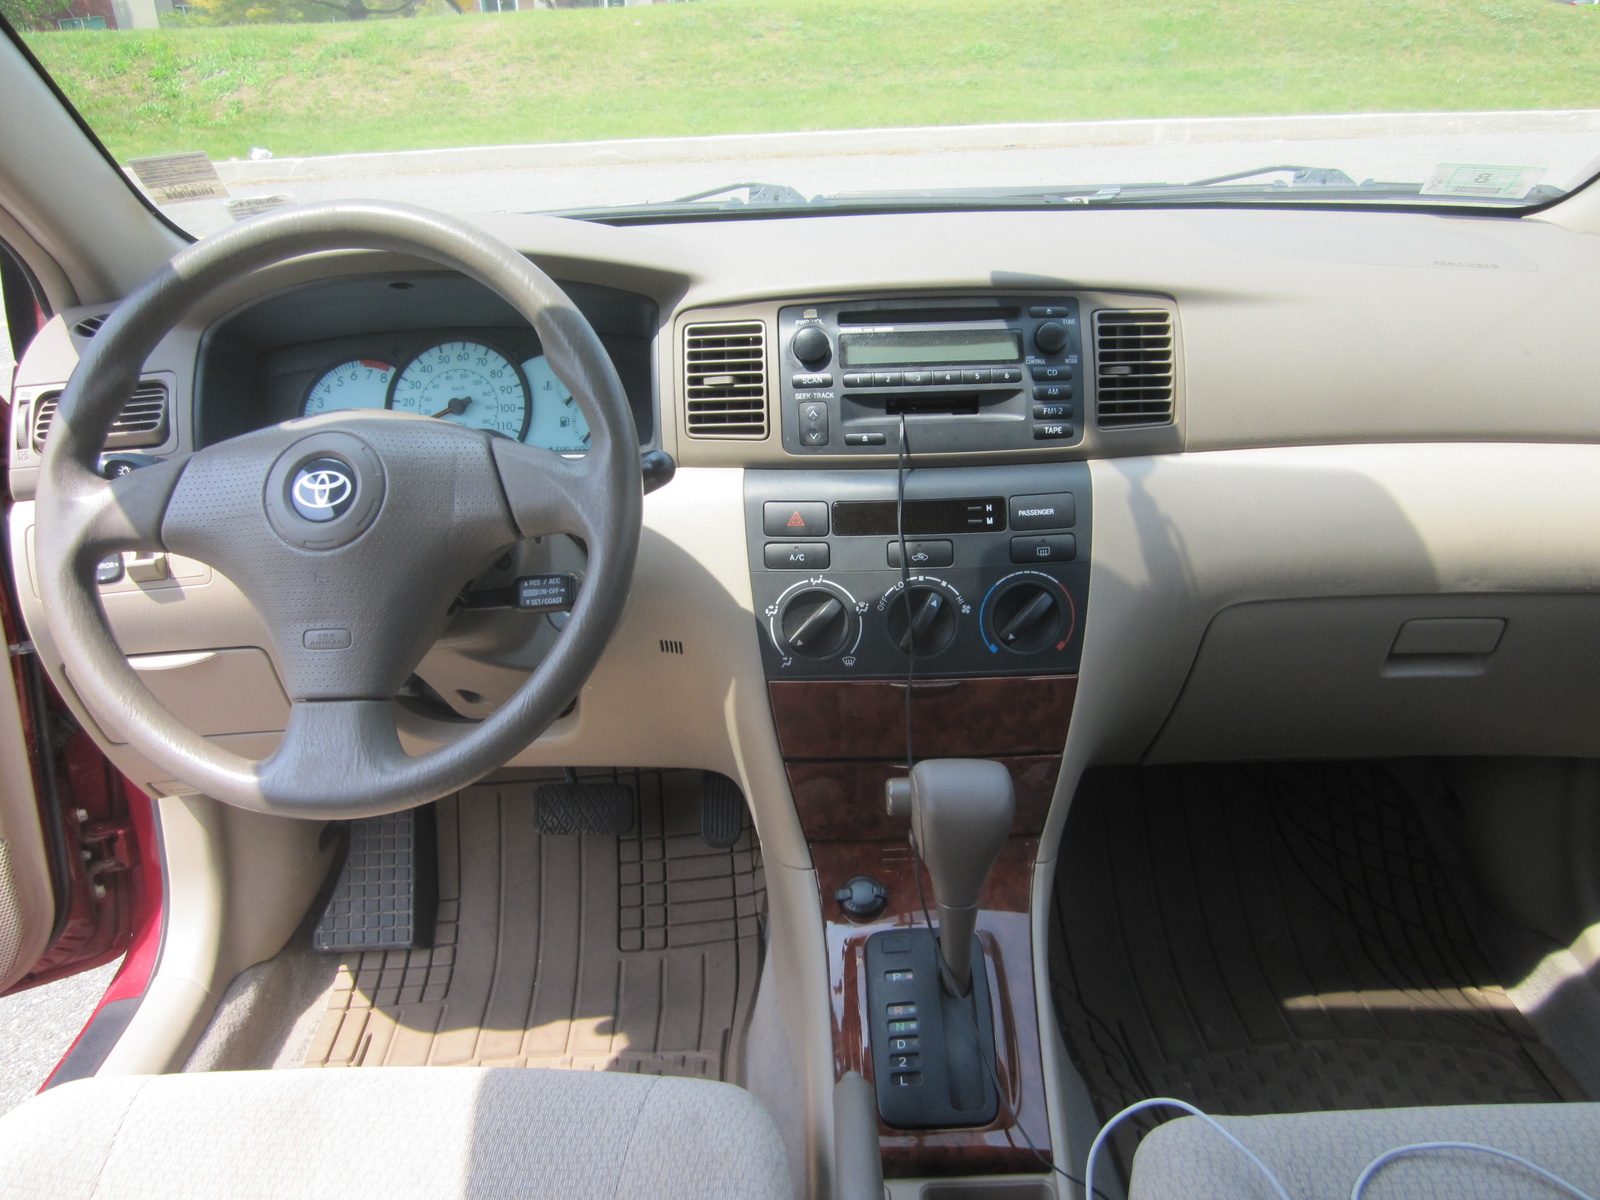 2004 Toyota corolla interior pictures